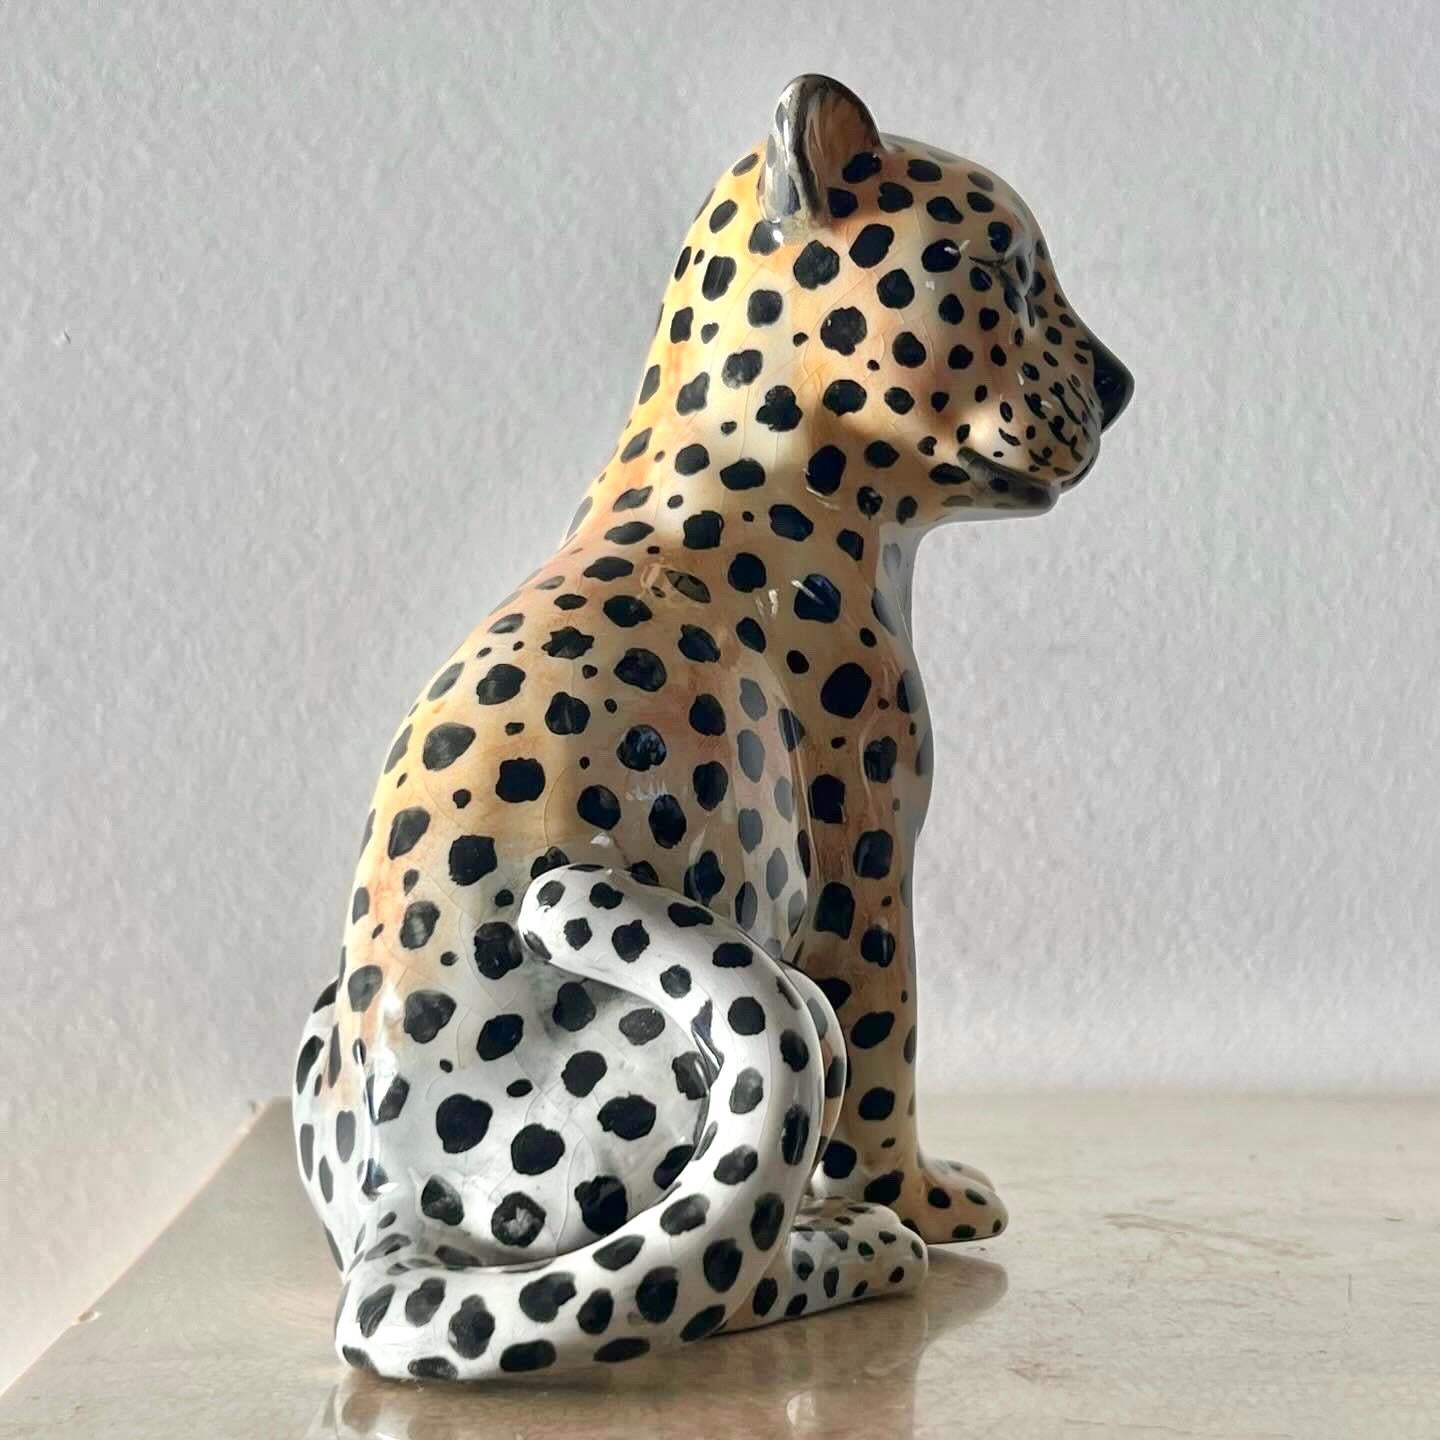 20th Century Vintage Italian ceramic sculpture of a leopard, mid 20th century. 